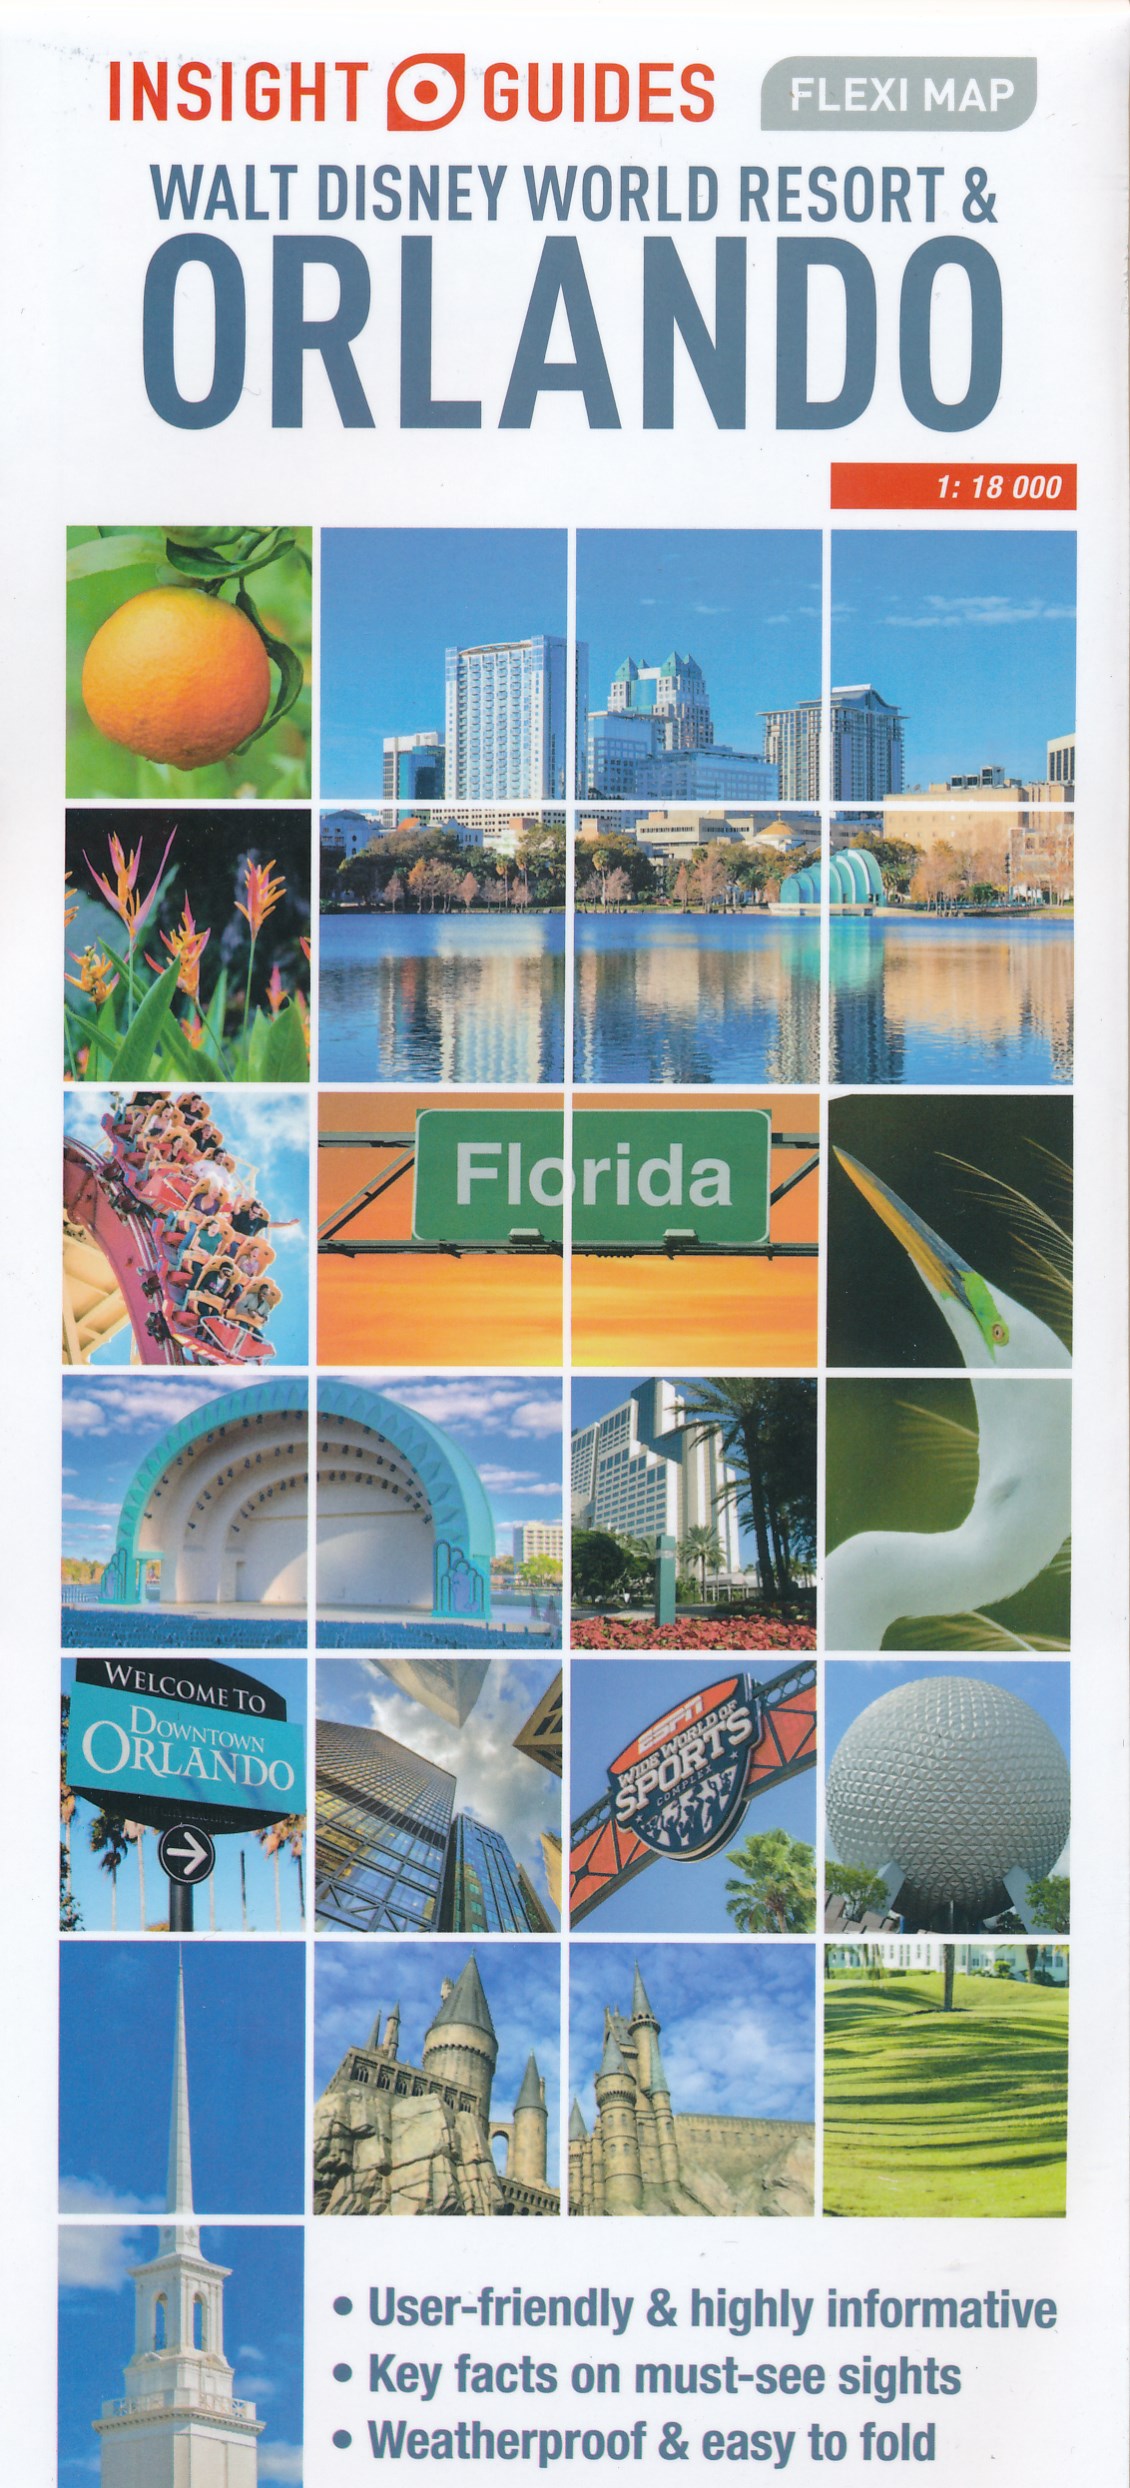 Online bestellen: Wegenkaart - landkaart - Stadsplattegrond Fleximap Orlando - Walt Disney world resort | Insight Guides